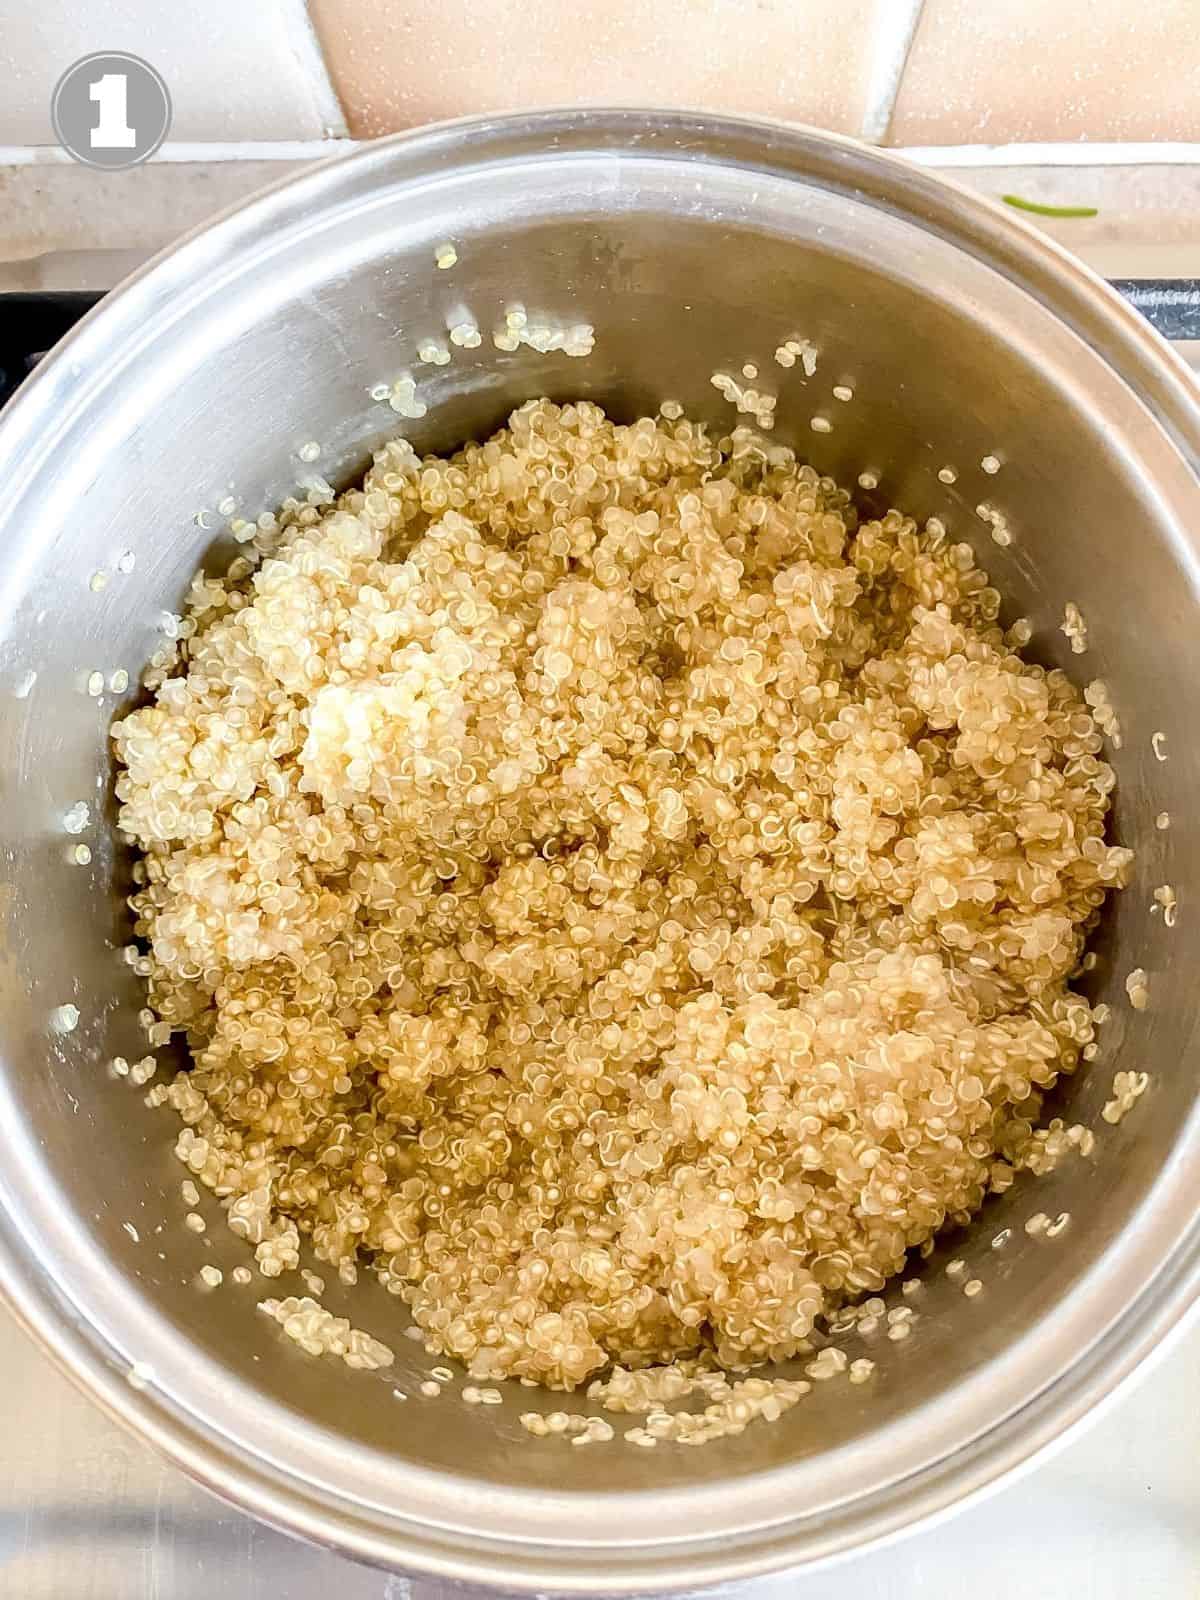 cooked quinoa in a metal saucepan.